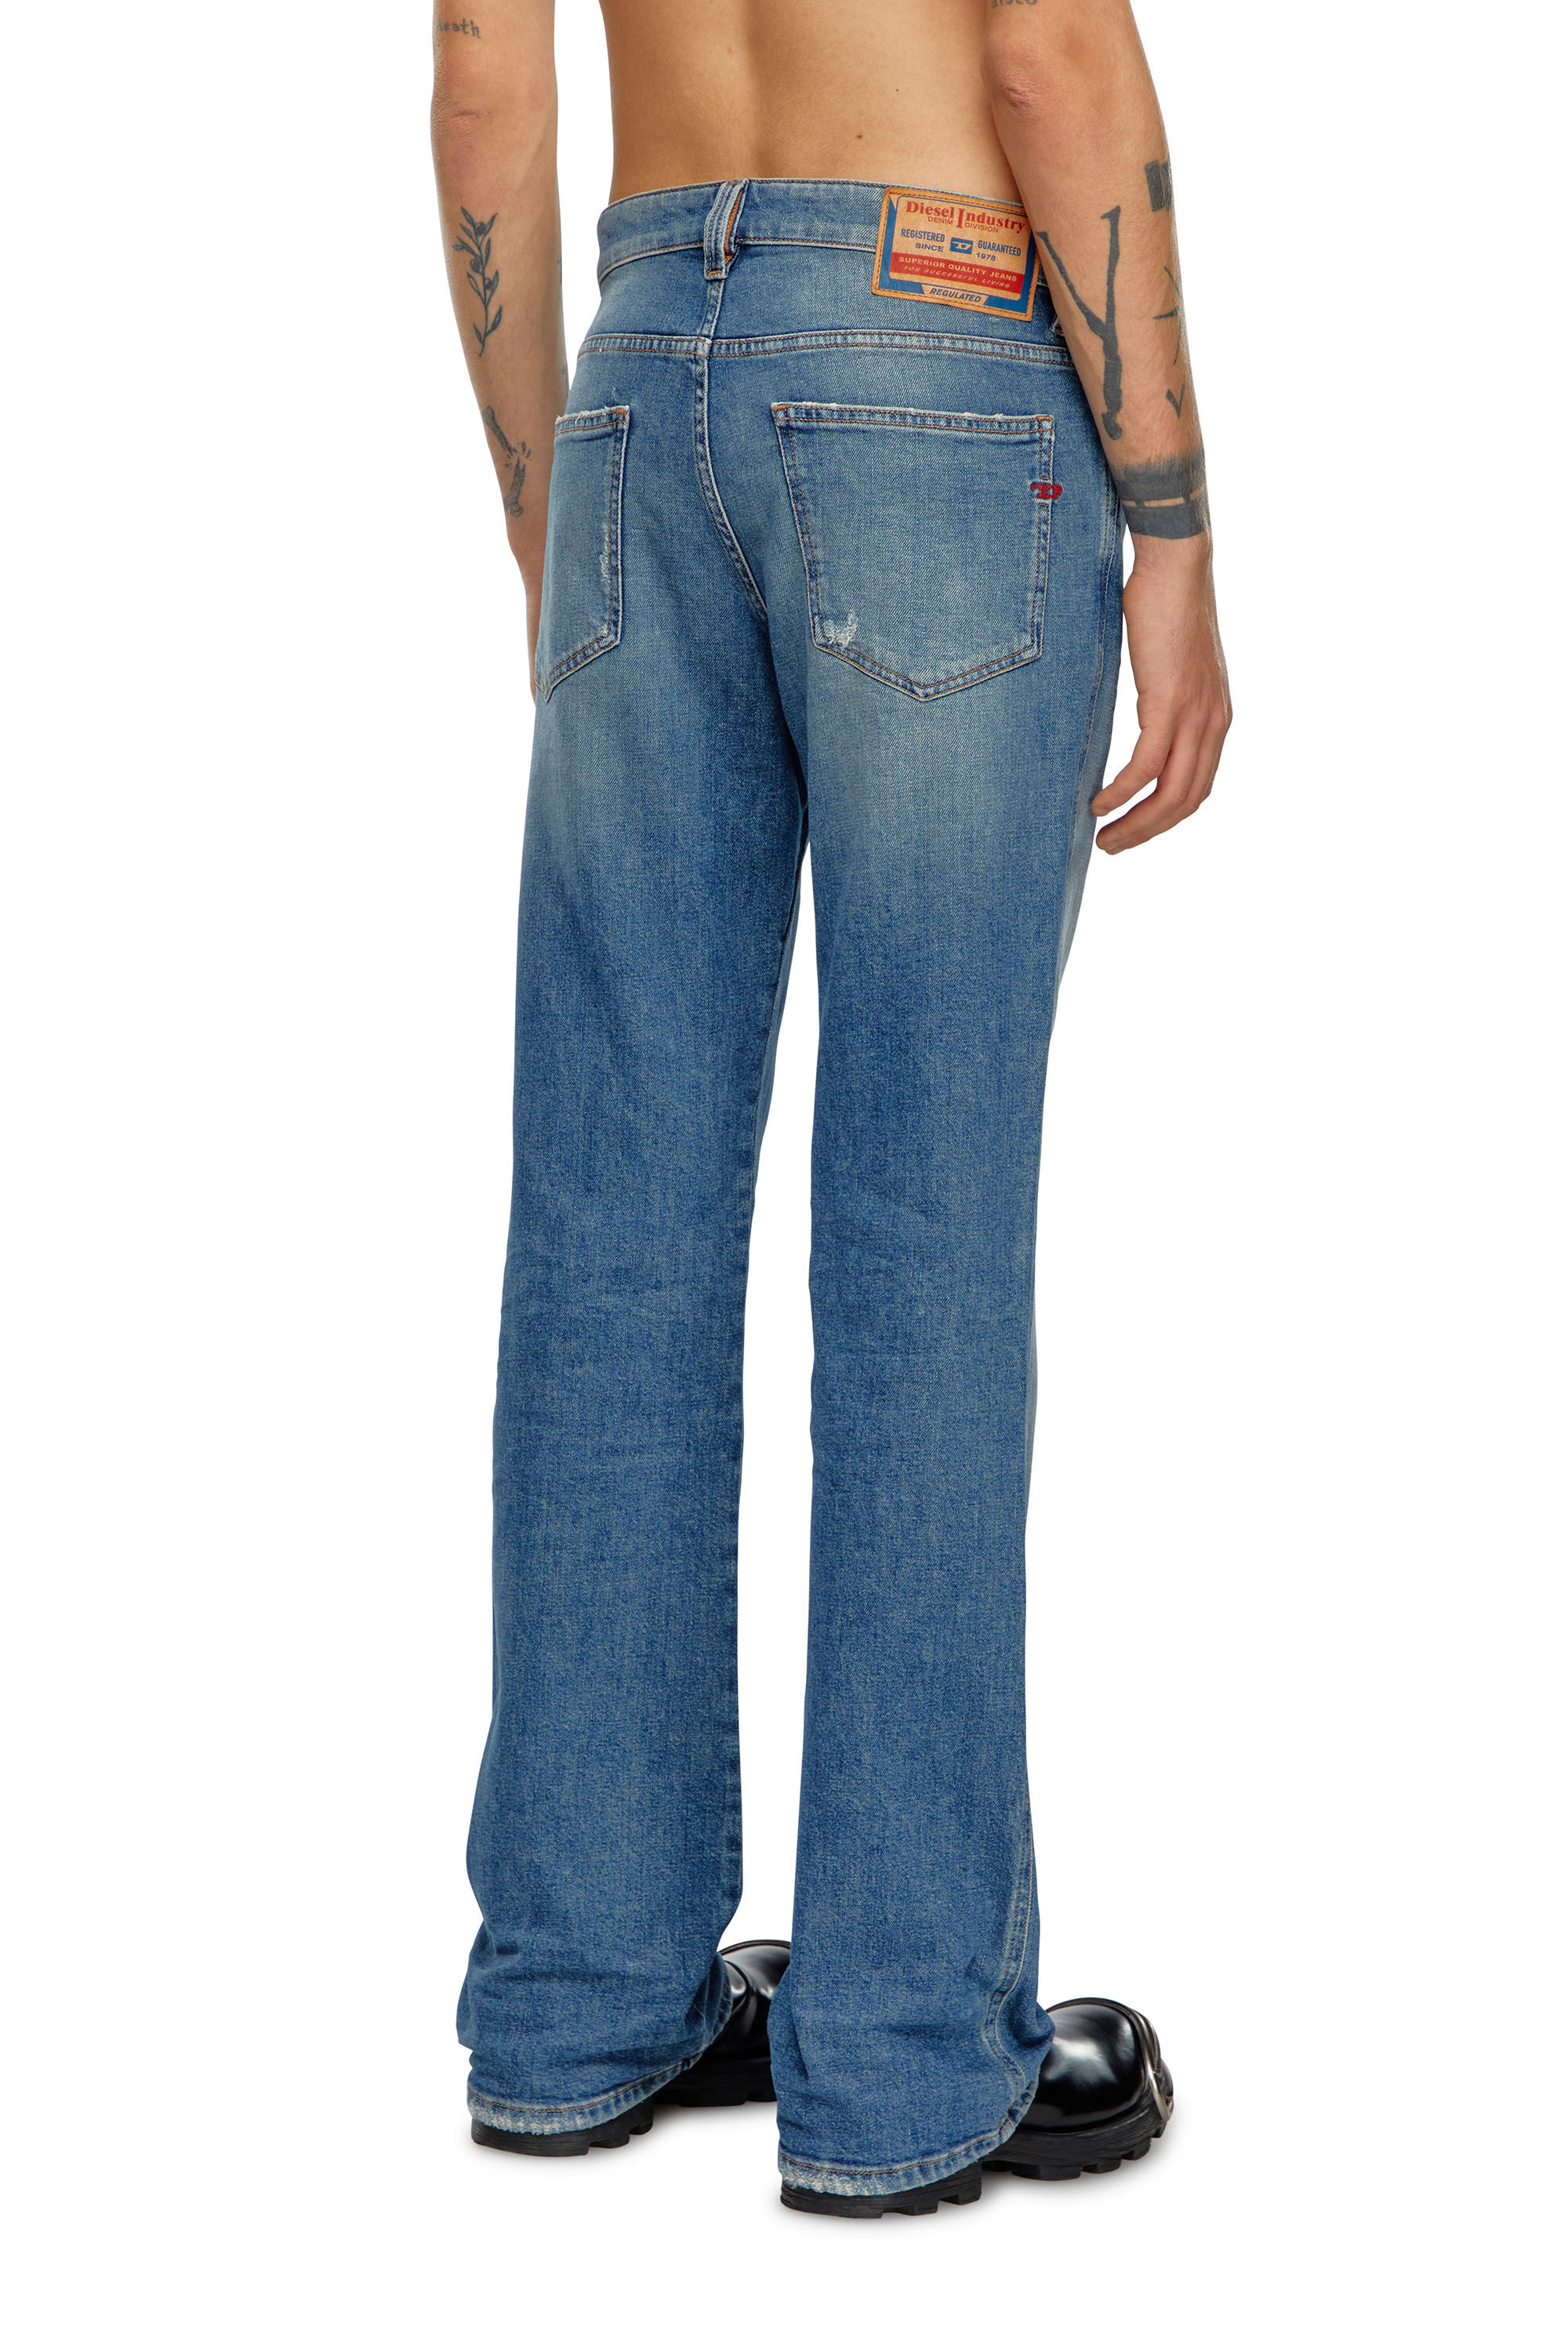 Diesel - Bootcut Jeans 1998 D-Buck 0GRDG, Hombre Bootcut Jeans - 1998 D-Buck in Azul marino - Image 4